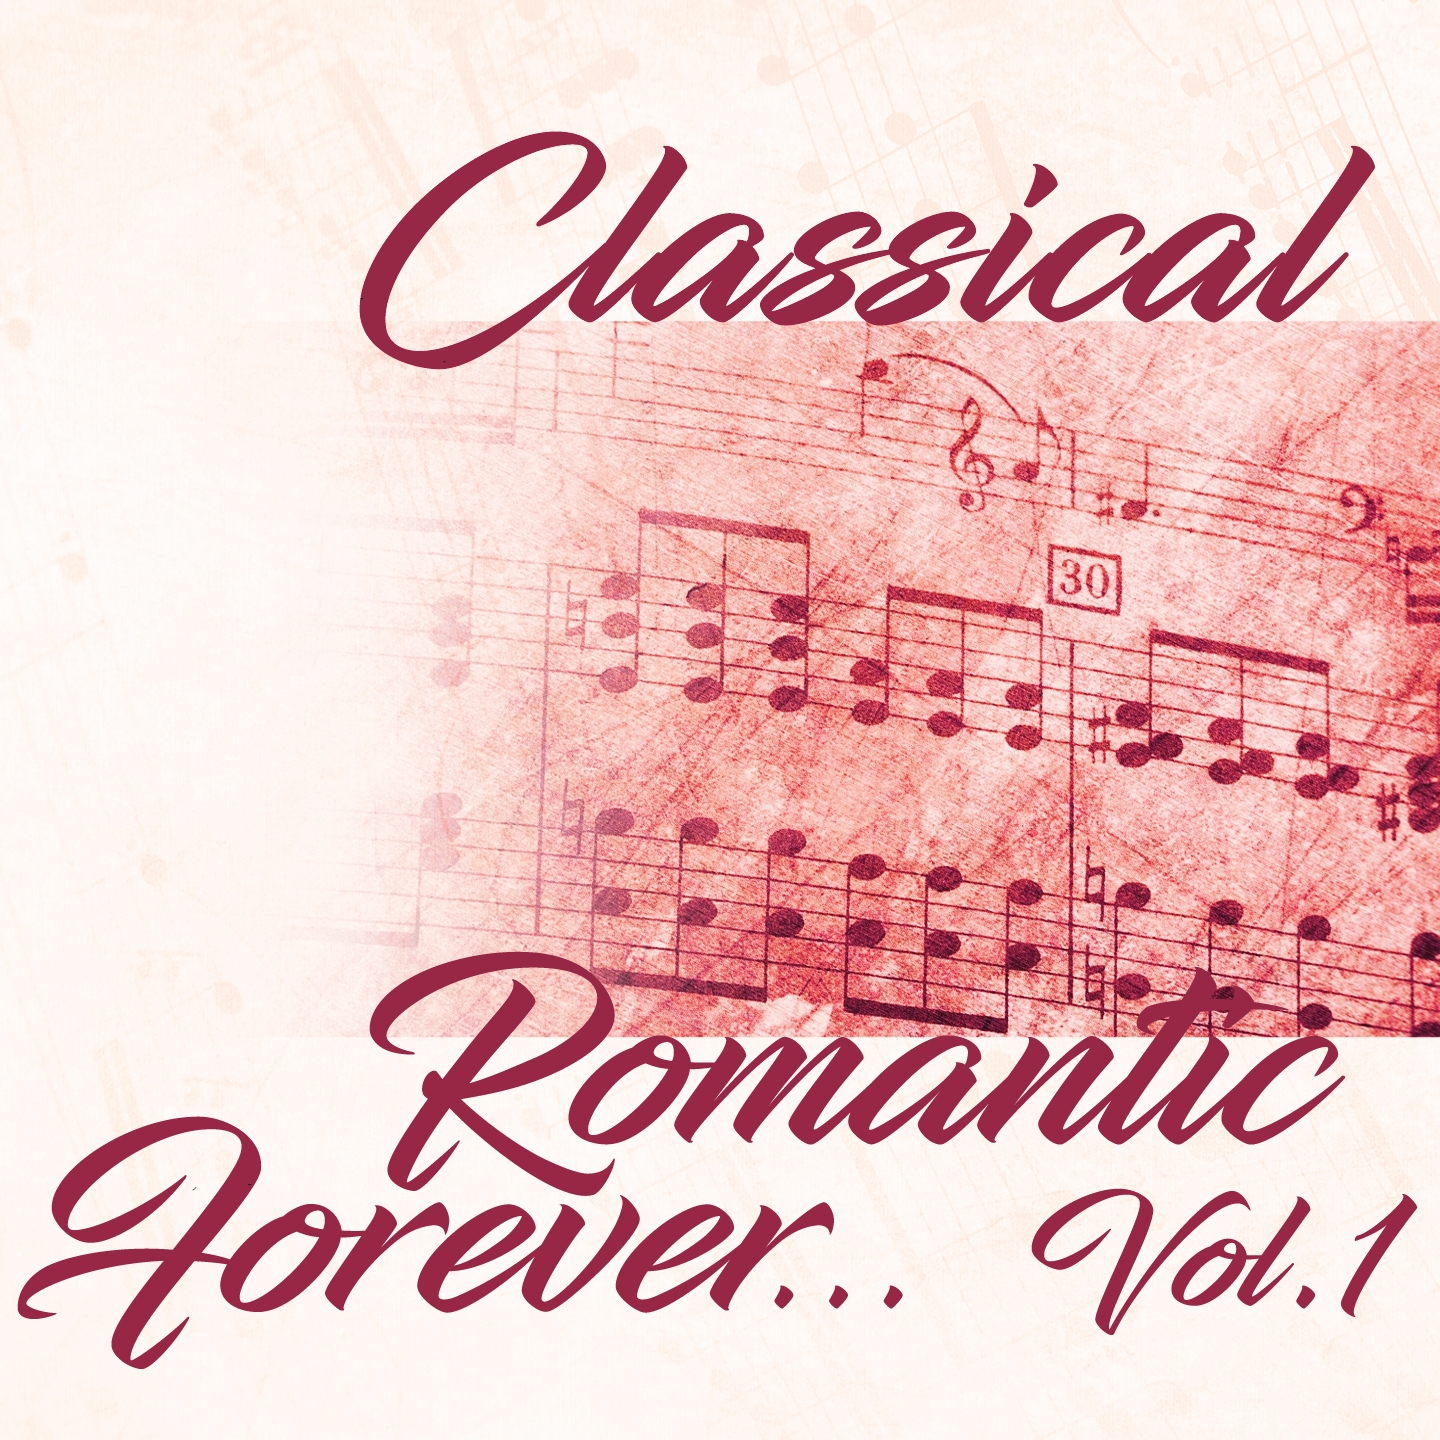 Classical Romantic Forever... Vol. 1